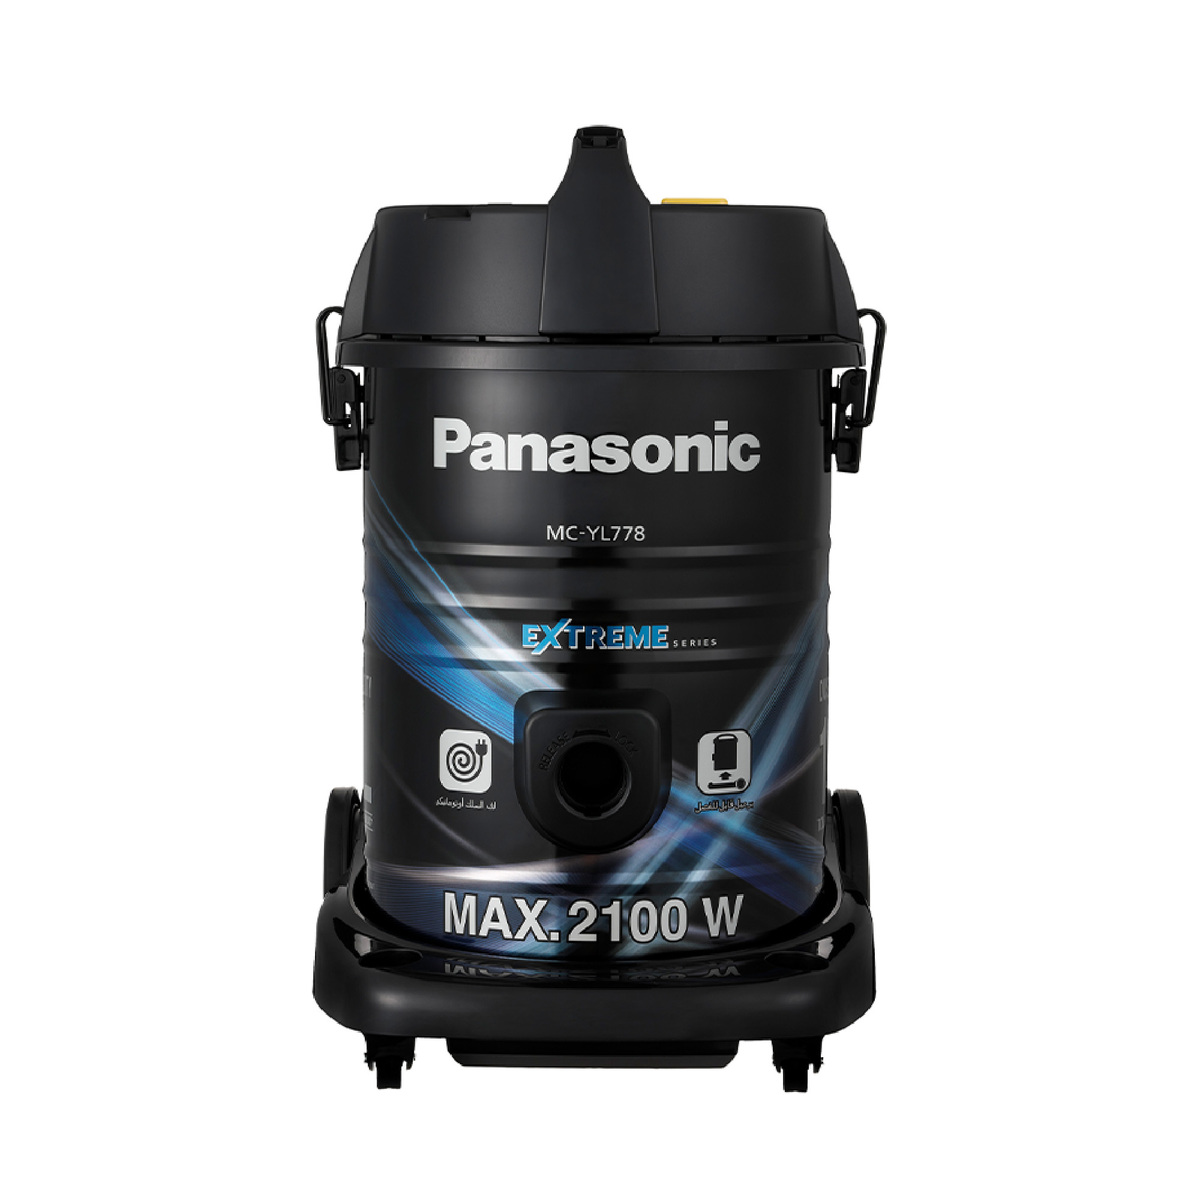 Panasonic Drum Vacuum Cleaner MC-YL778A 2100W